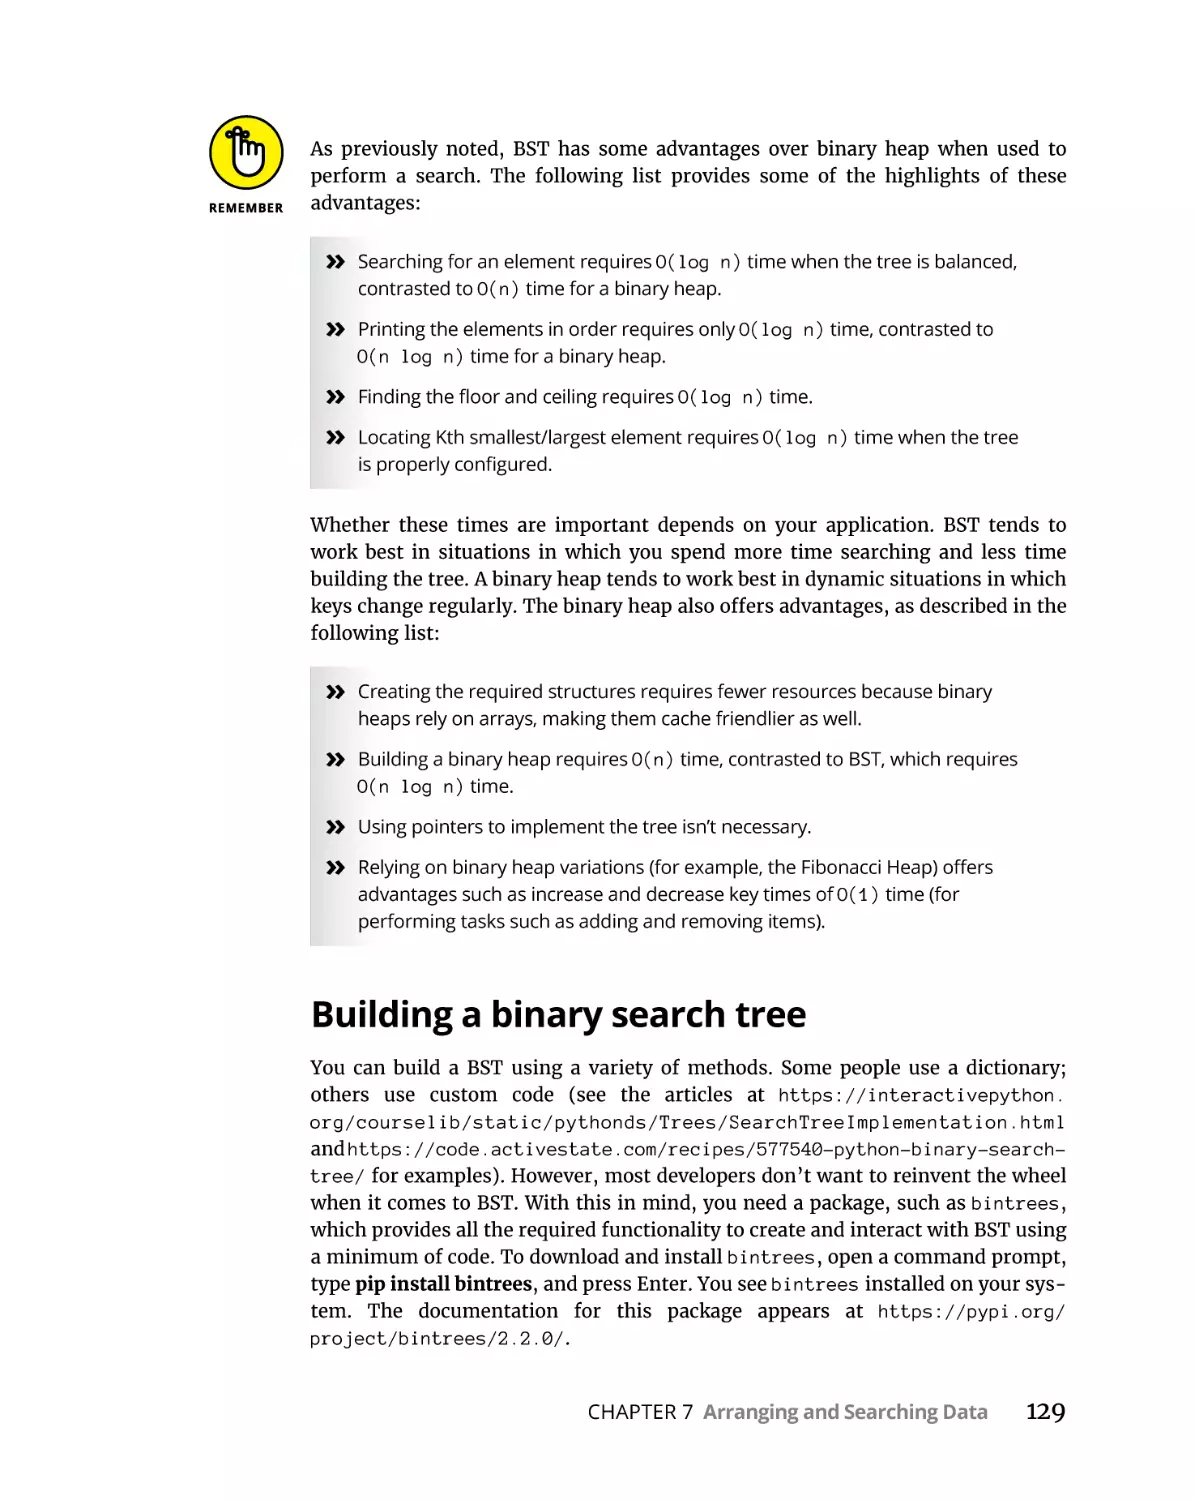 Building a binary search tree